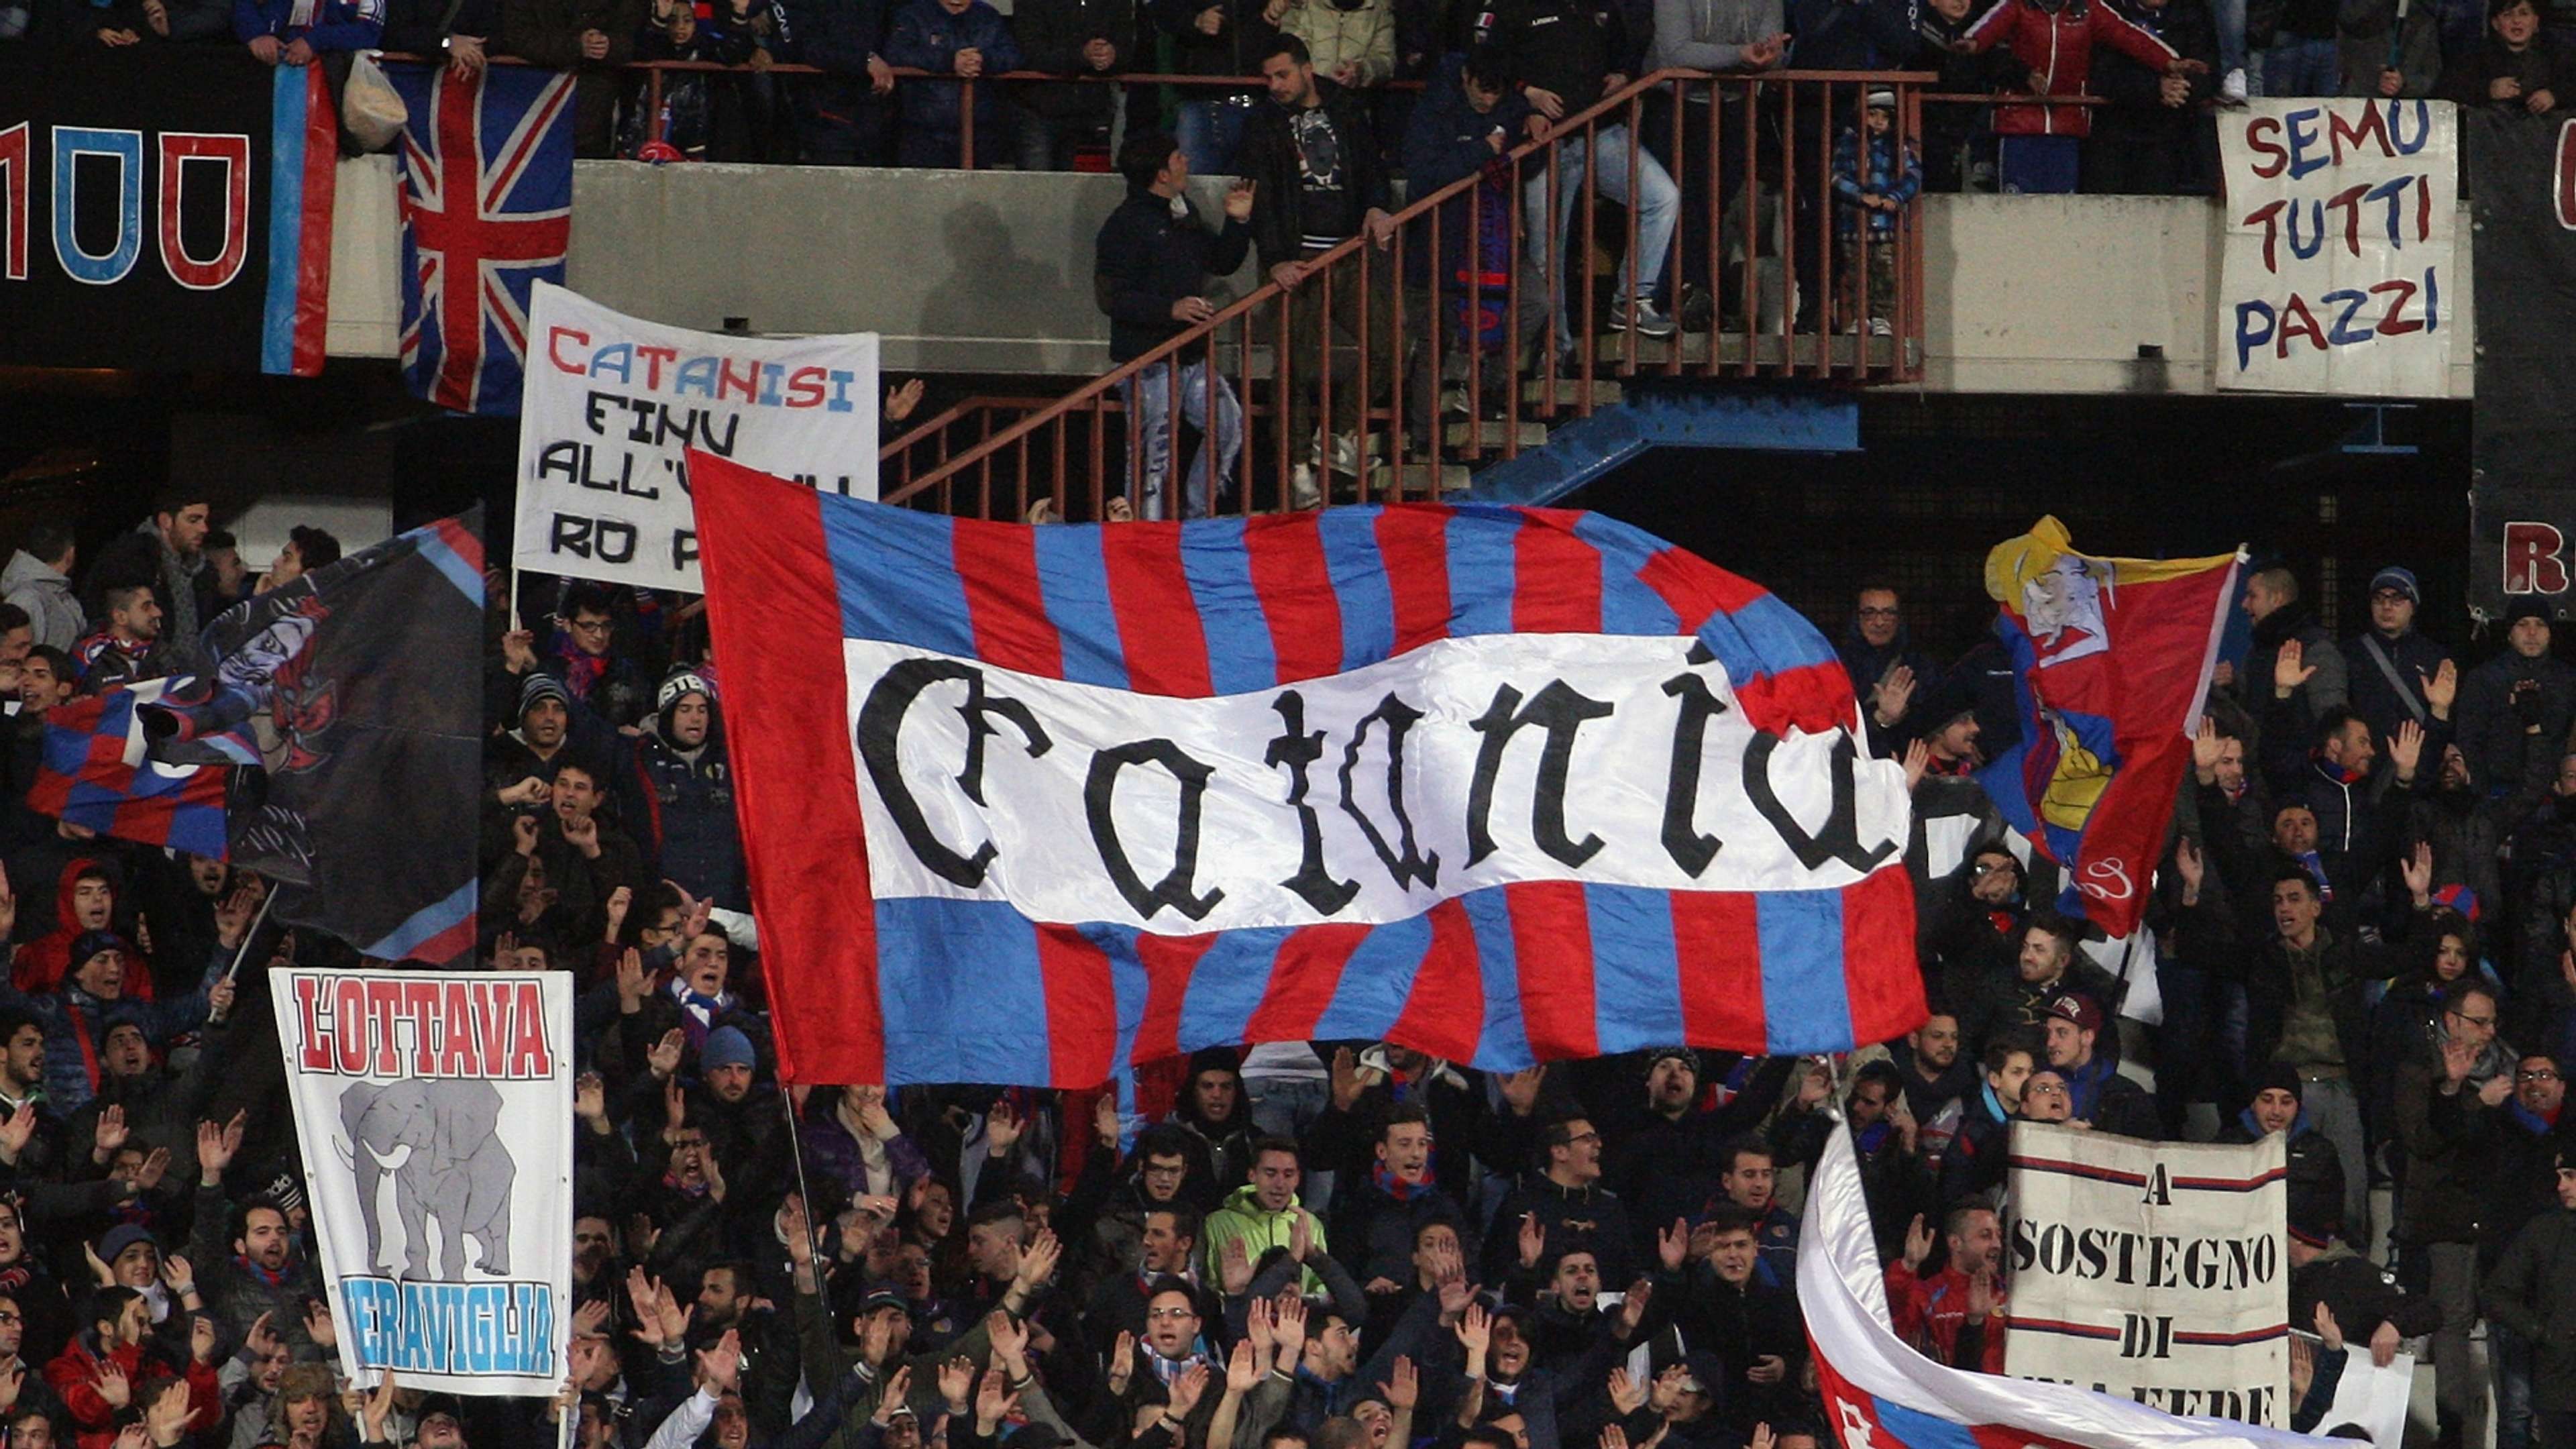 Catania fans